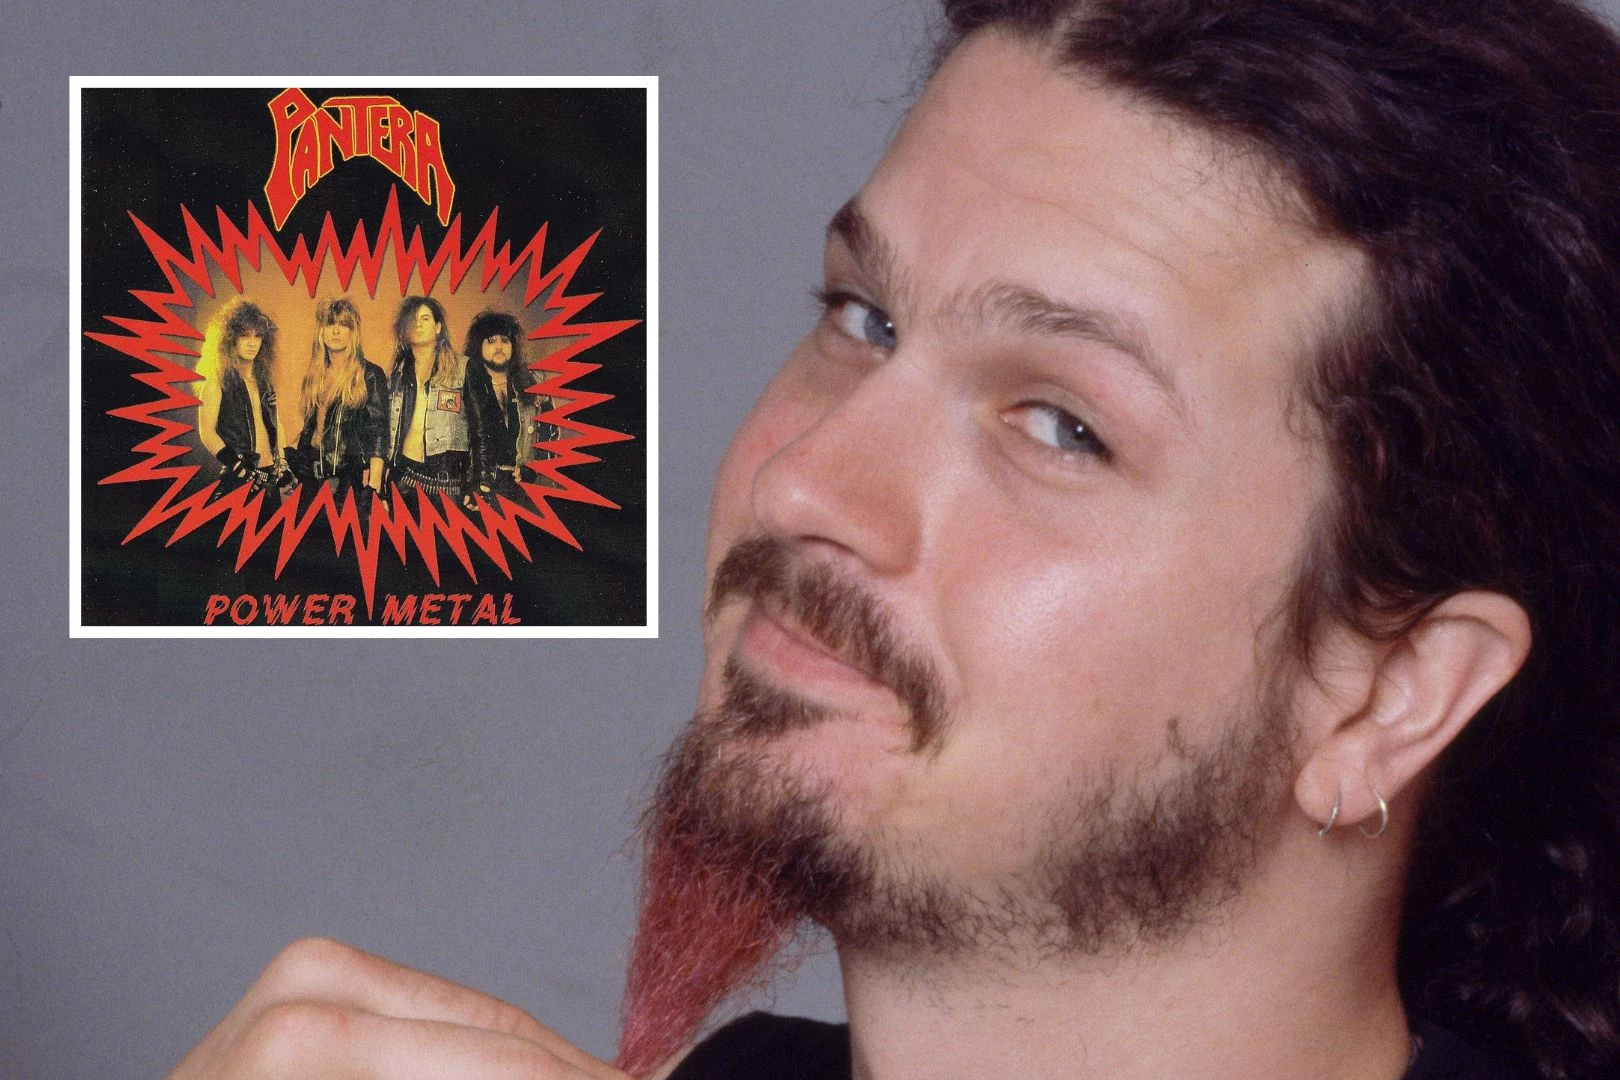 Pantera's Cringey Sex Song That Dimebag Darrell Sang Lead On